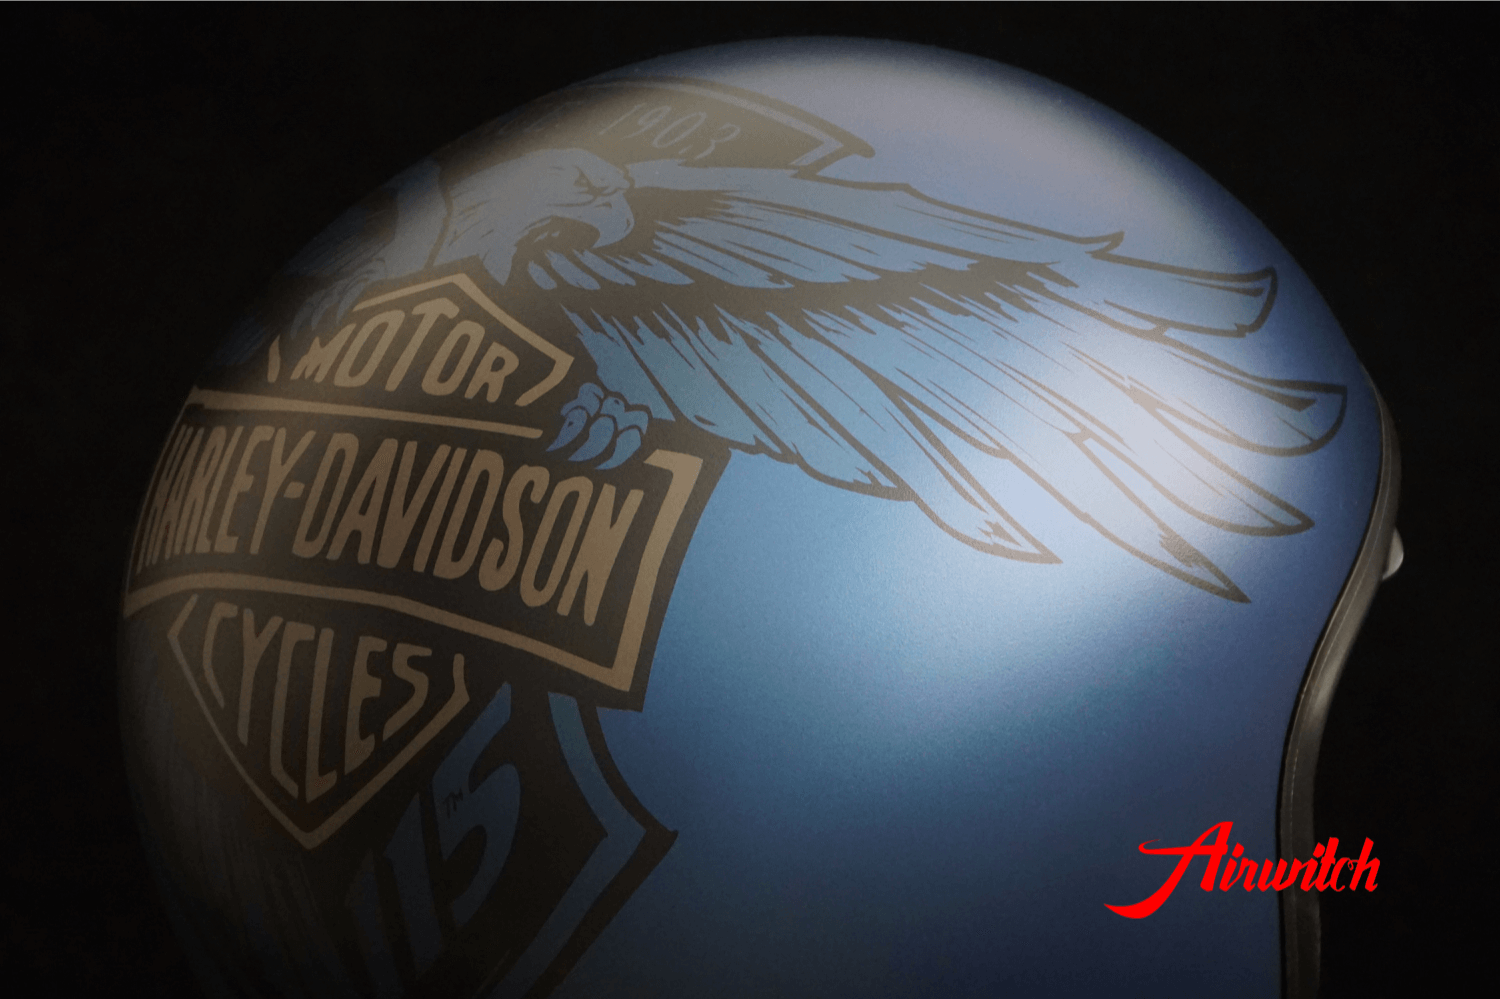 Custom Paint Helm eagle 115 anniversary Harley Davidson blue - Nachlackierung 